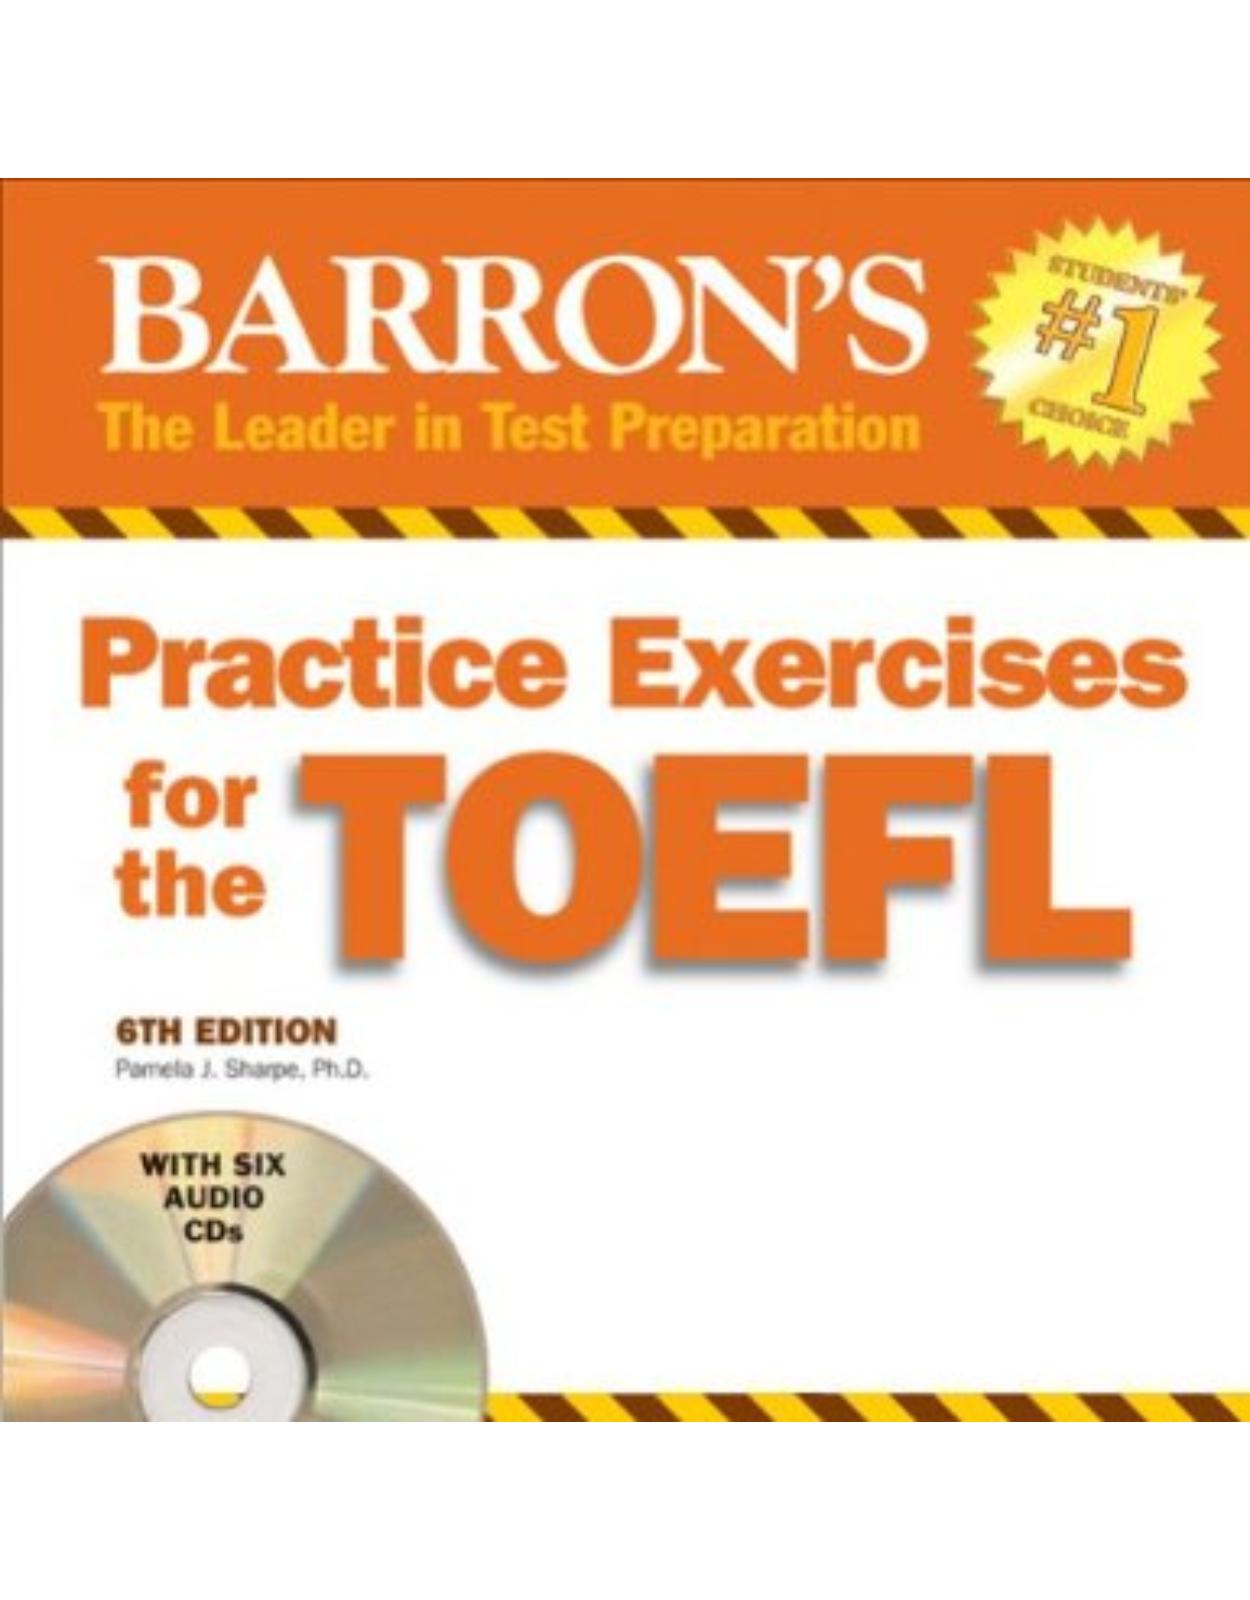 Practice Exercises for the TOEFL. Audio CD